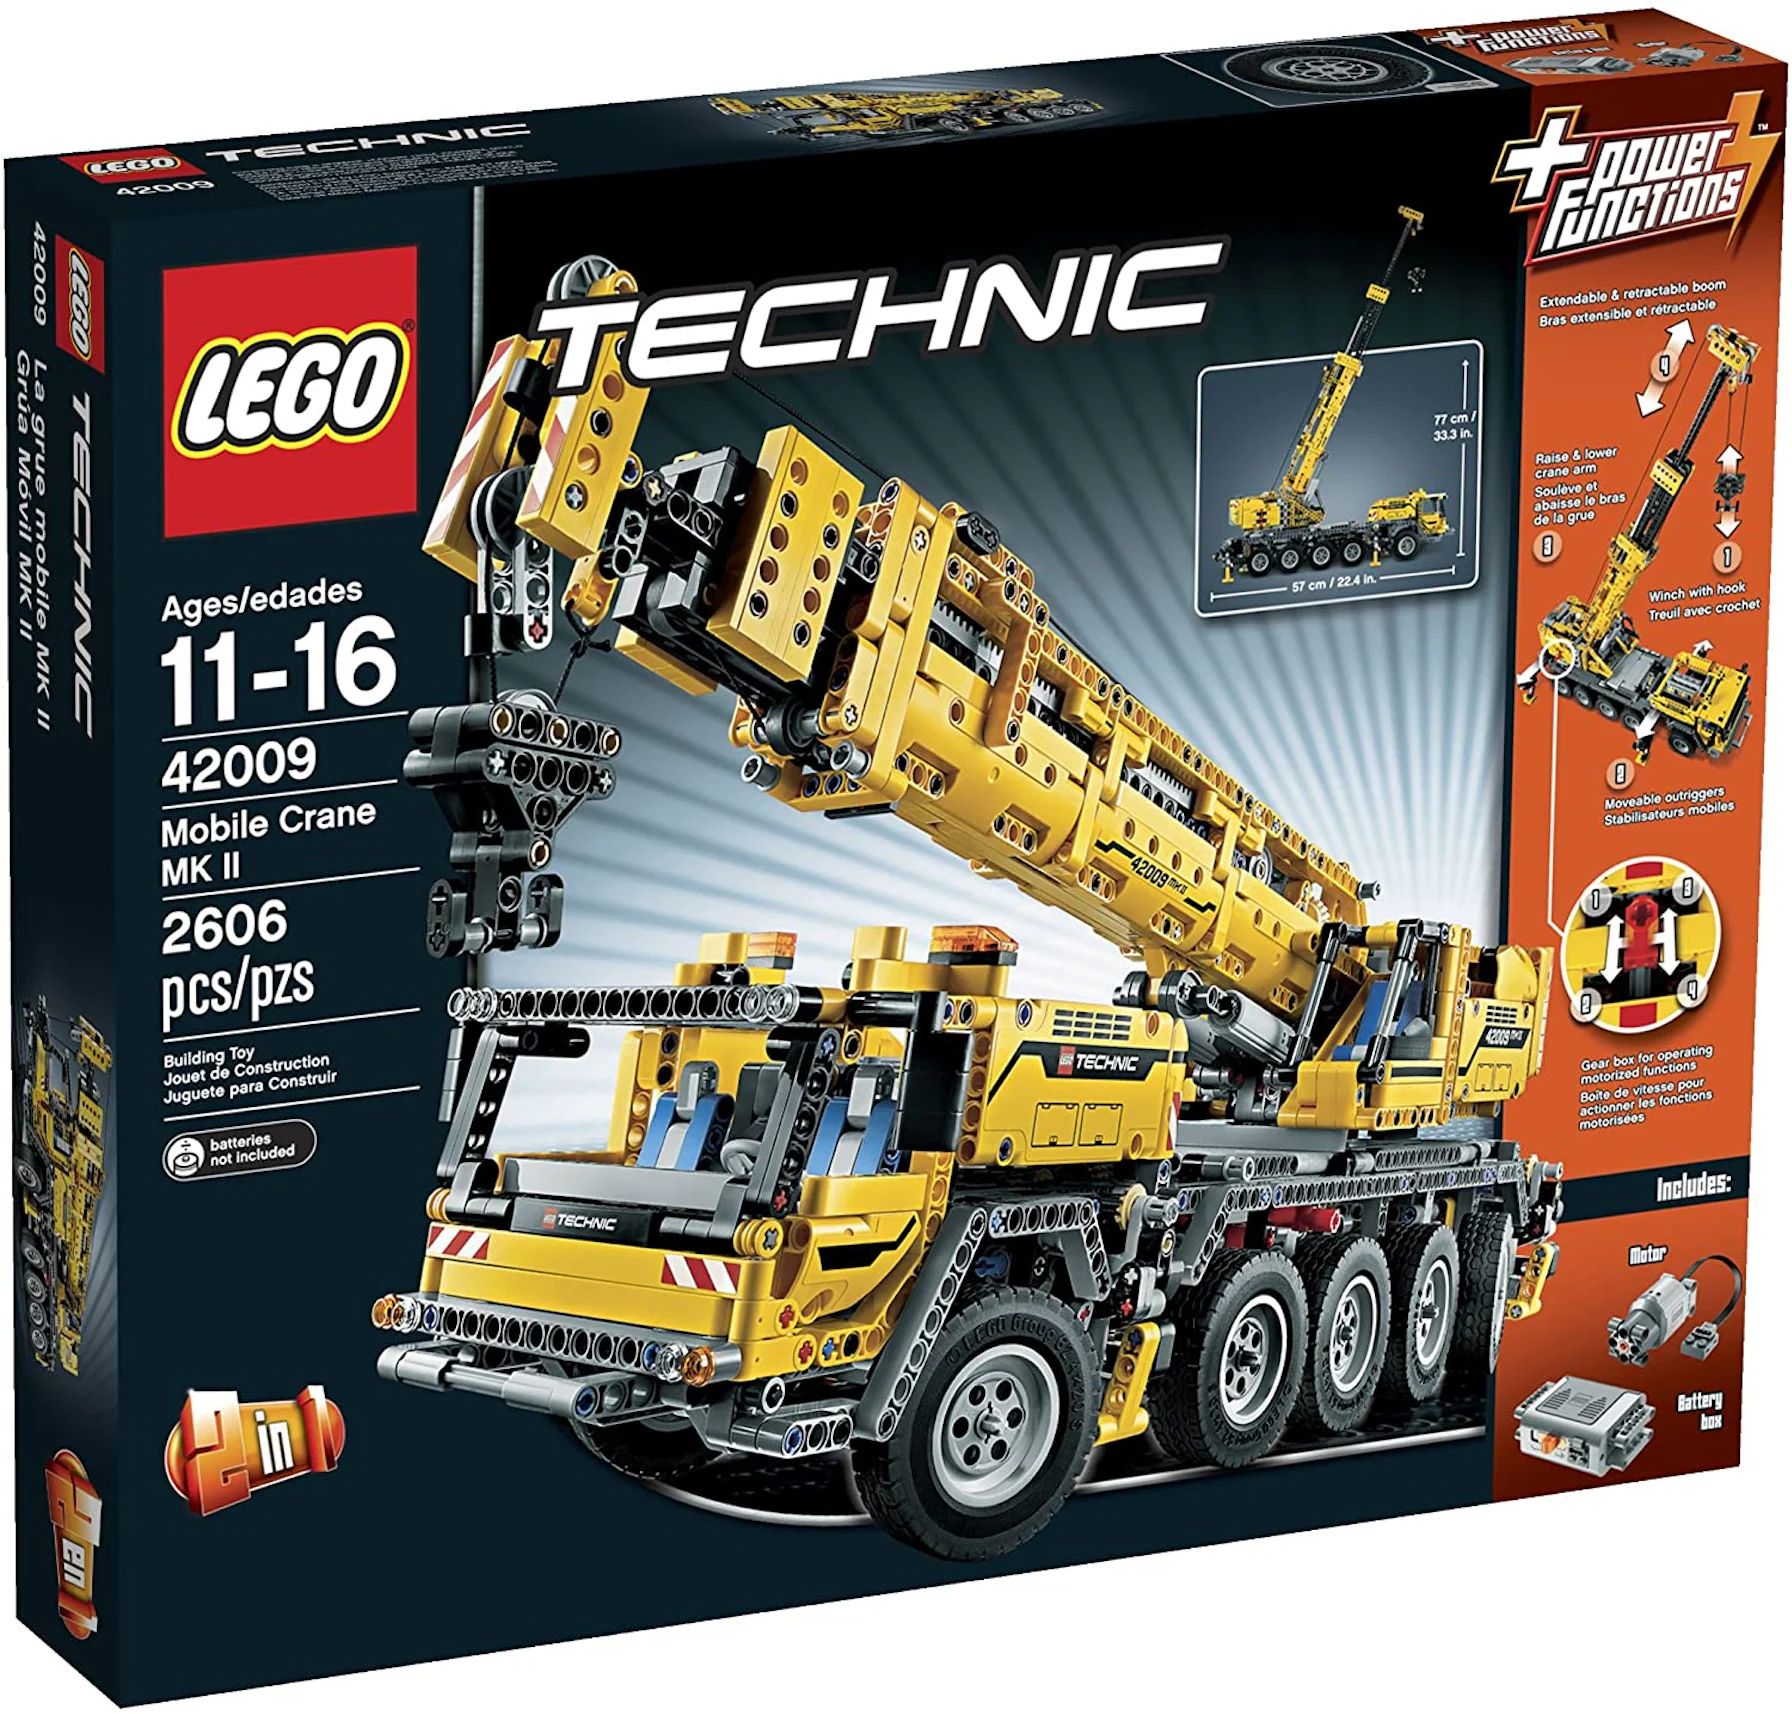 https://images.stockx.com/images/LEGO-Technic-Mobile-Crane-MK-II-Set-42009.jpg?fit=fill&bg=FFFFFF&w=1200&h=857&fm=webp&auto=compress&dpr=2&trim=color&updated_at=1613490650&q=60